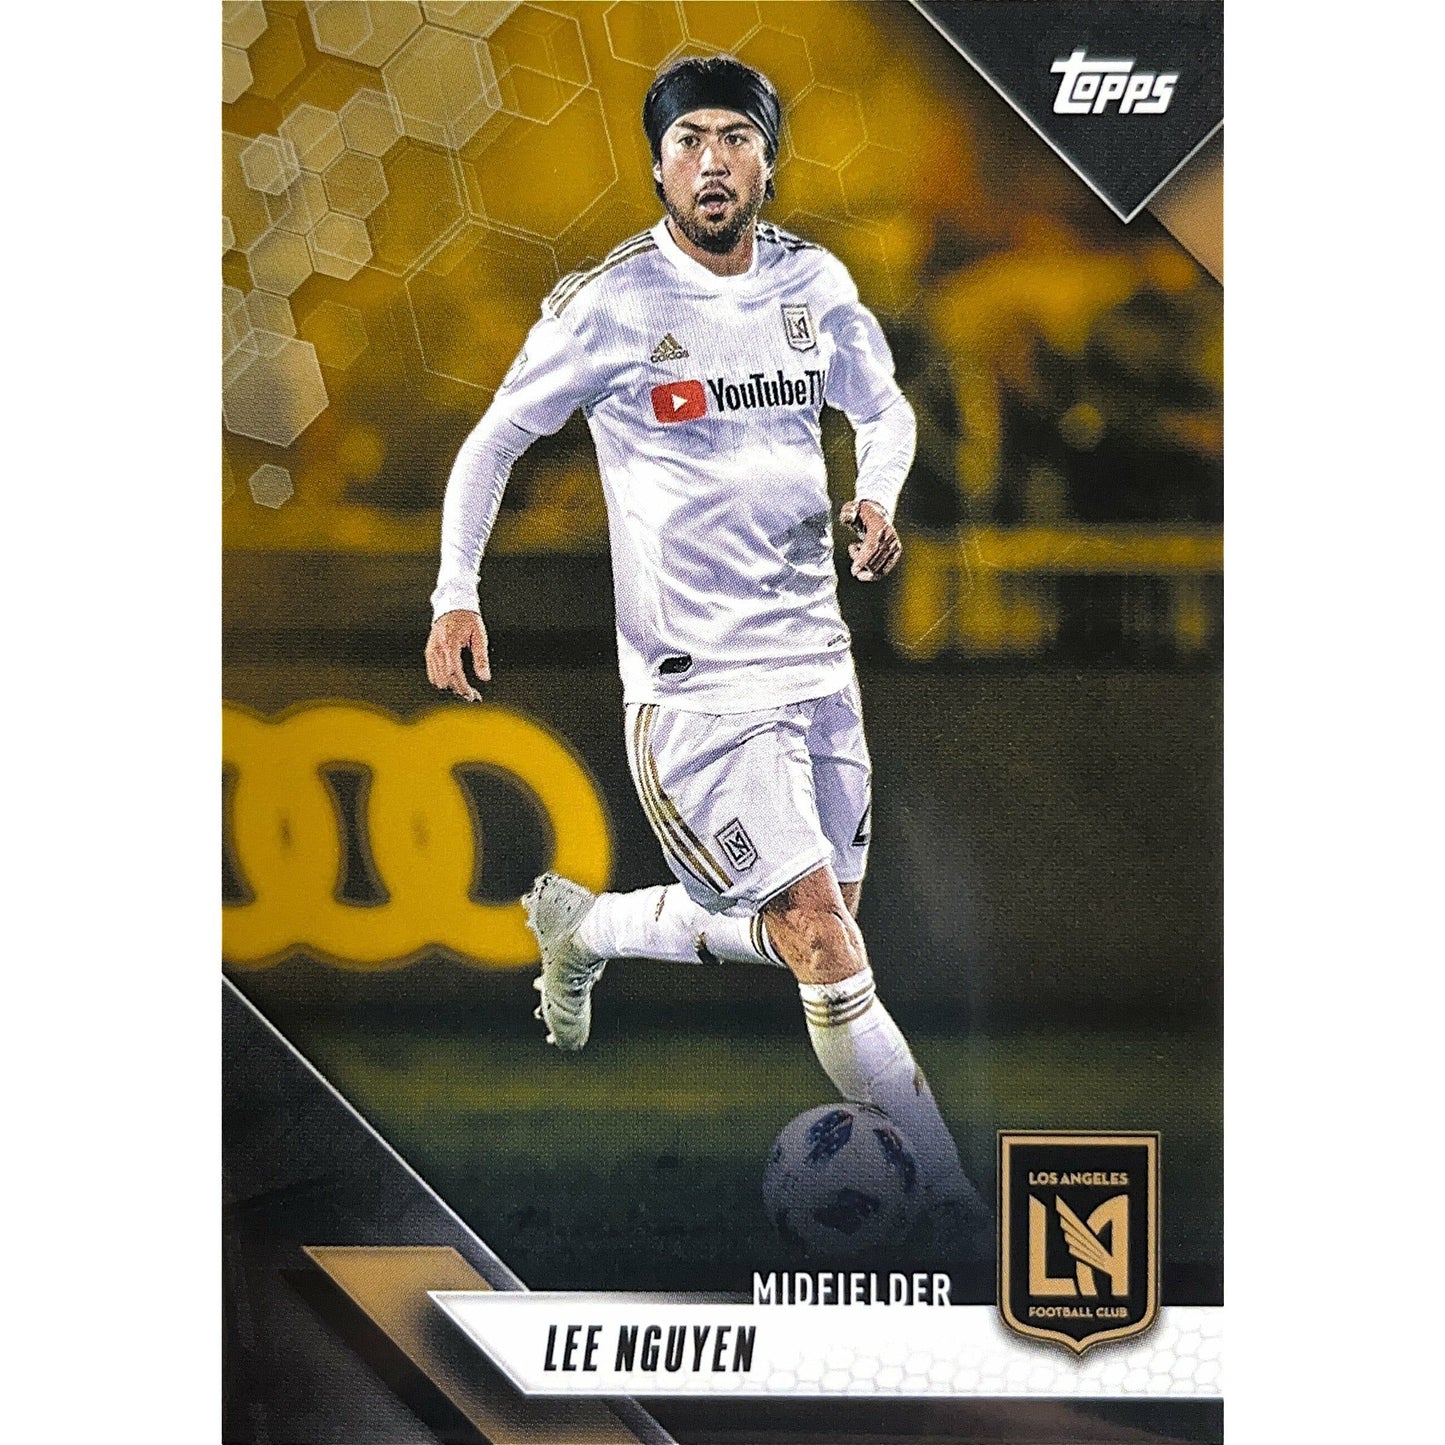 2019 Topps MLS Lee Nguyen /50